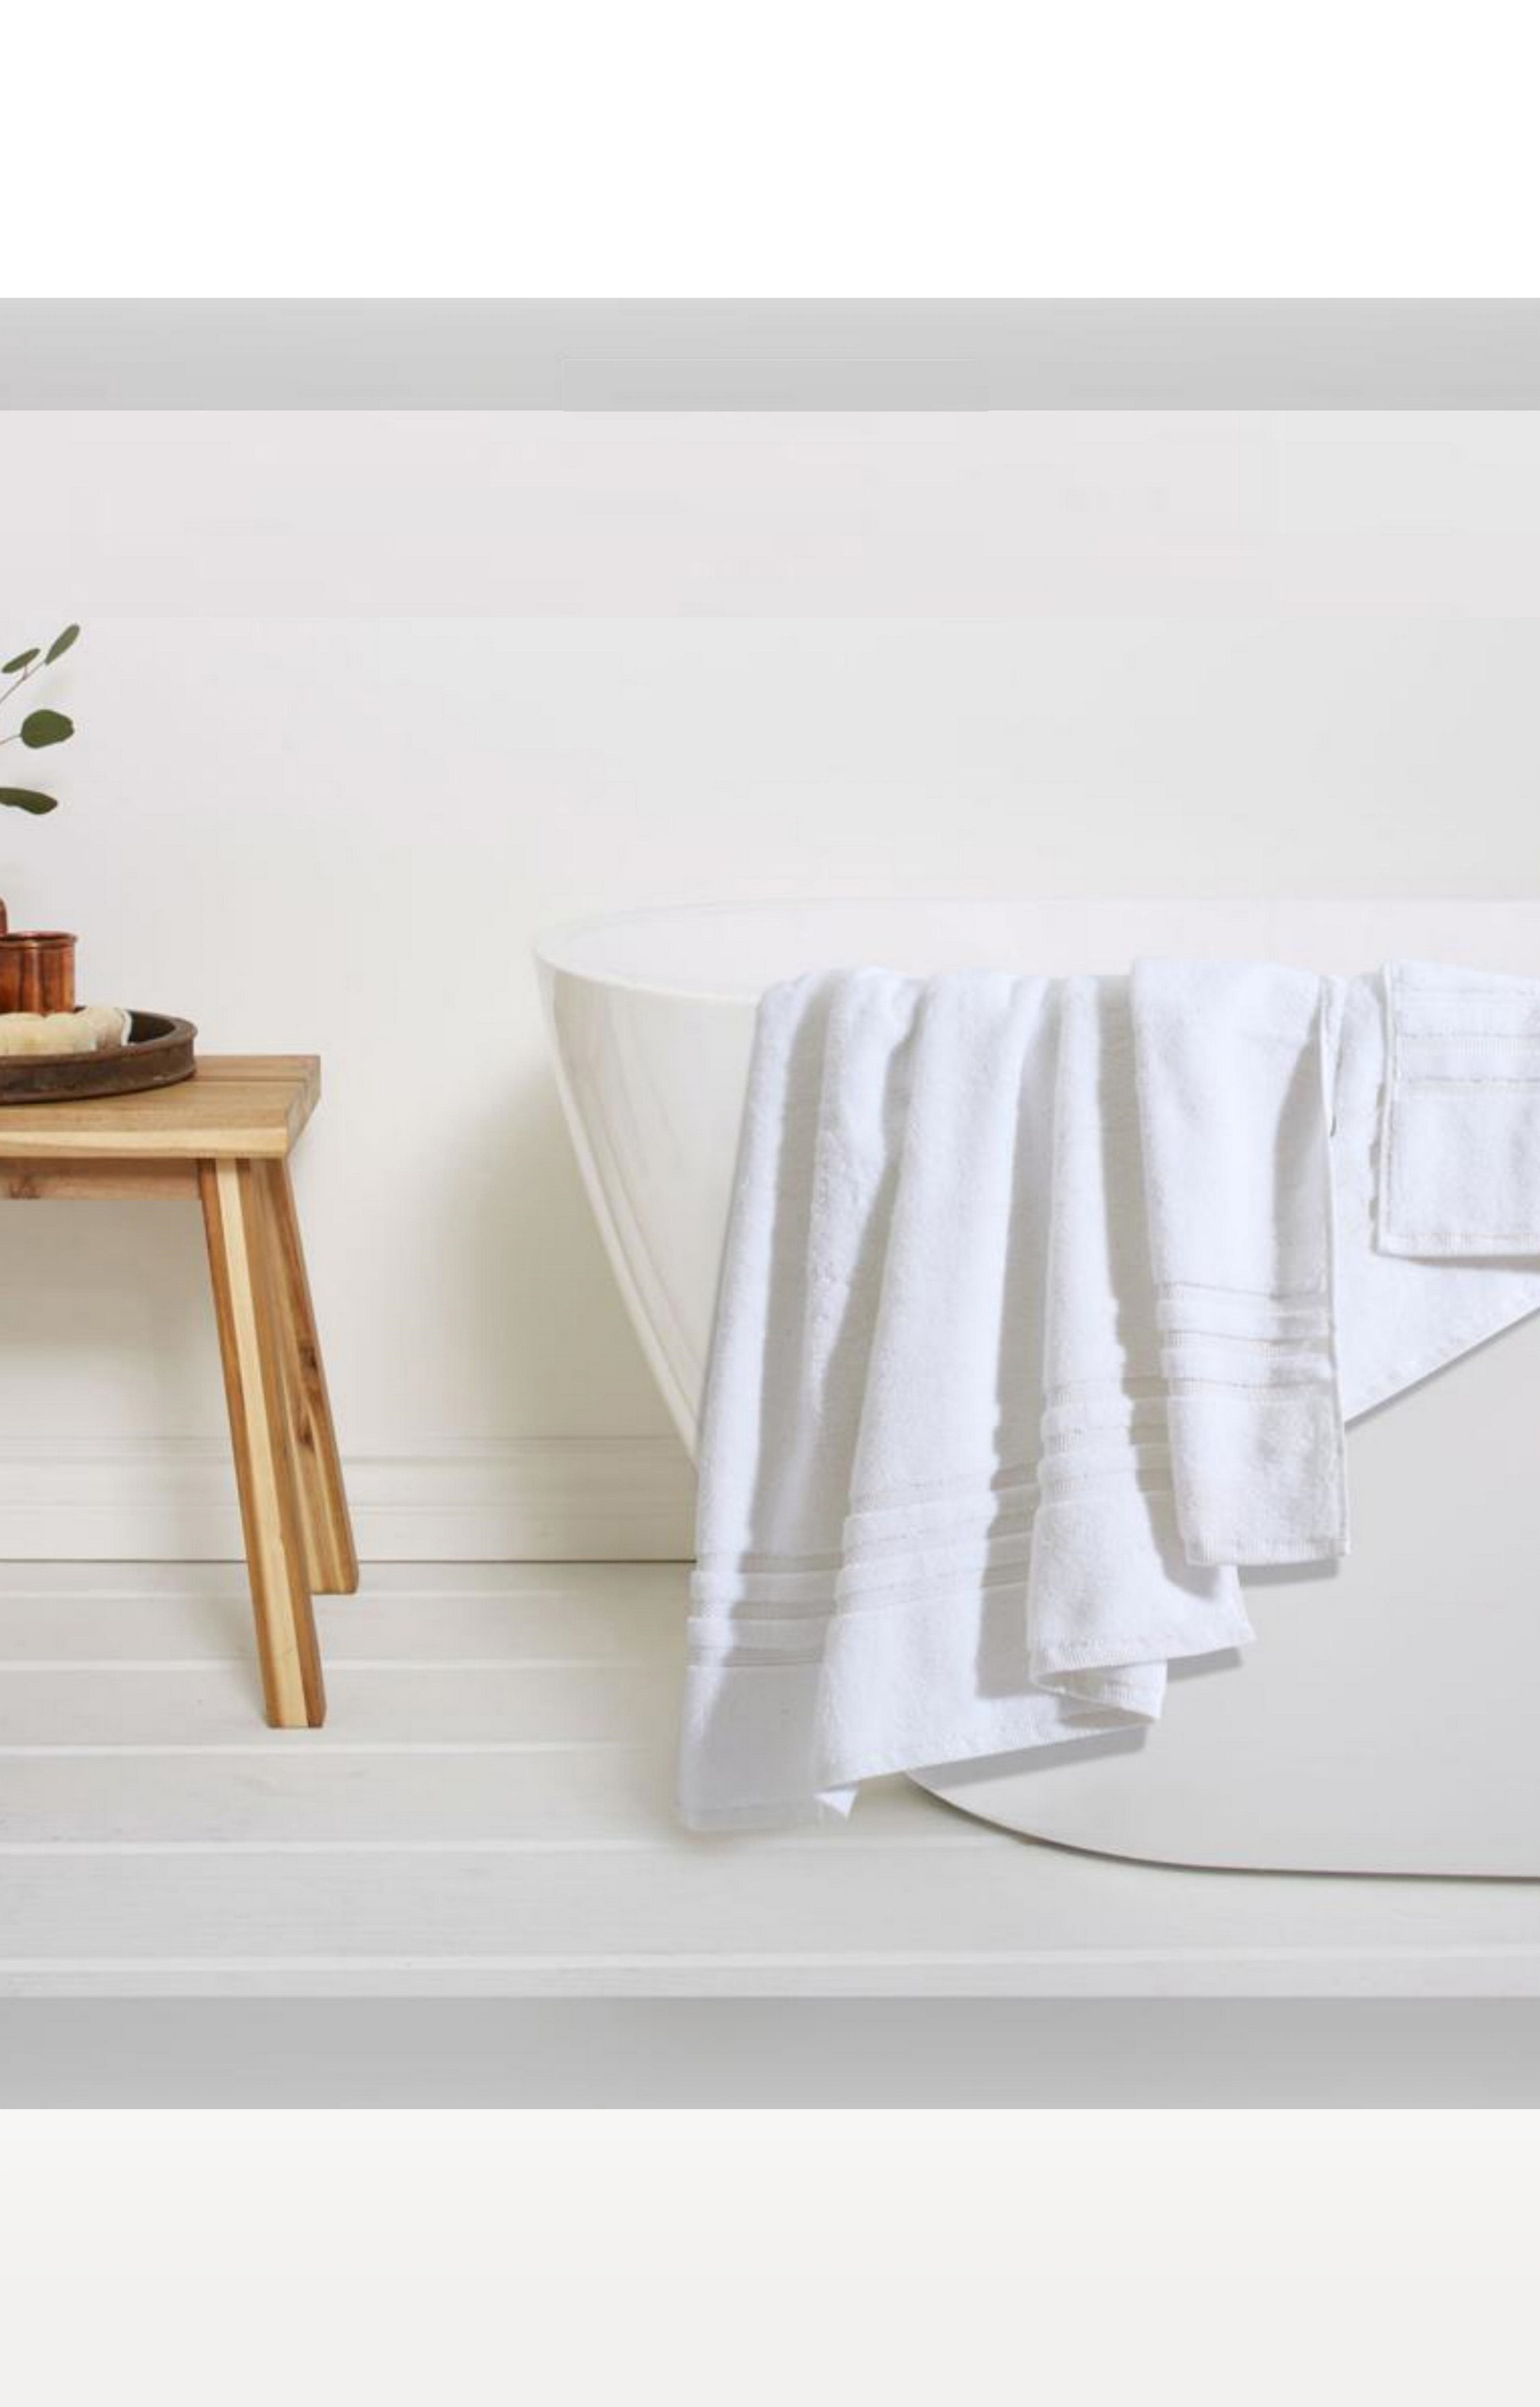 Sita Fabrics | Sita Fabrics Premium Cotton Super Soft Zero Twist Yarn Very Airy 600 GSM Bath Towel - White - (24x48 Inch)